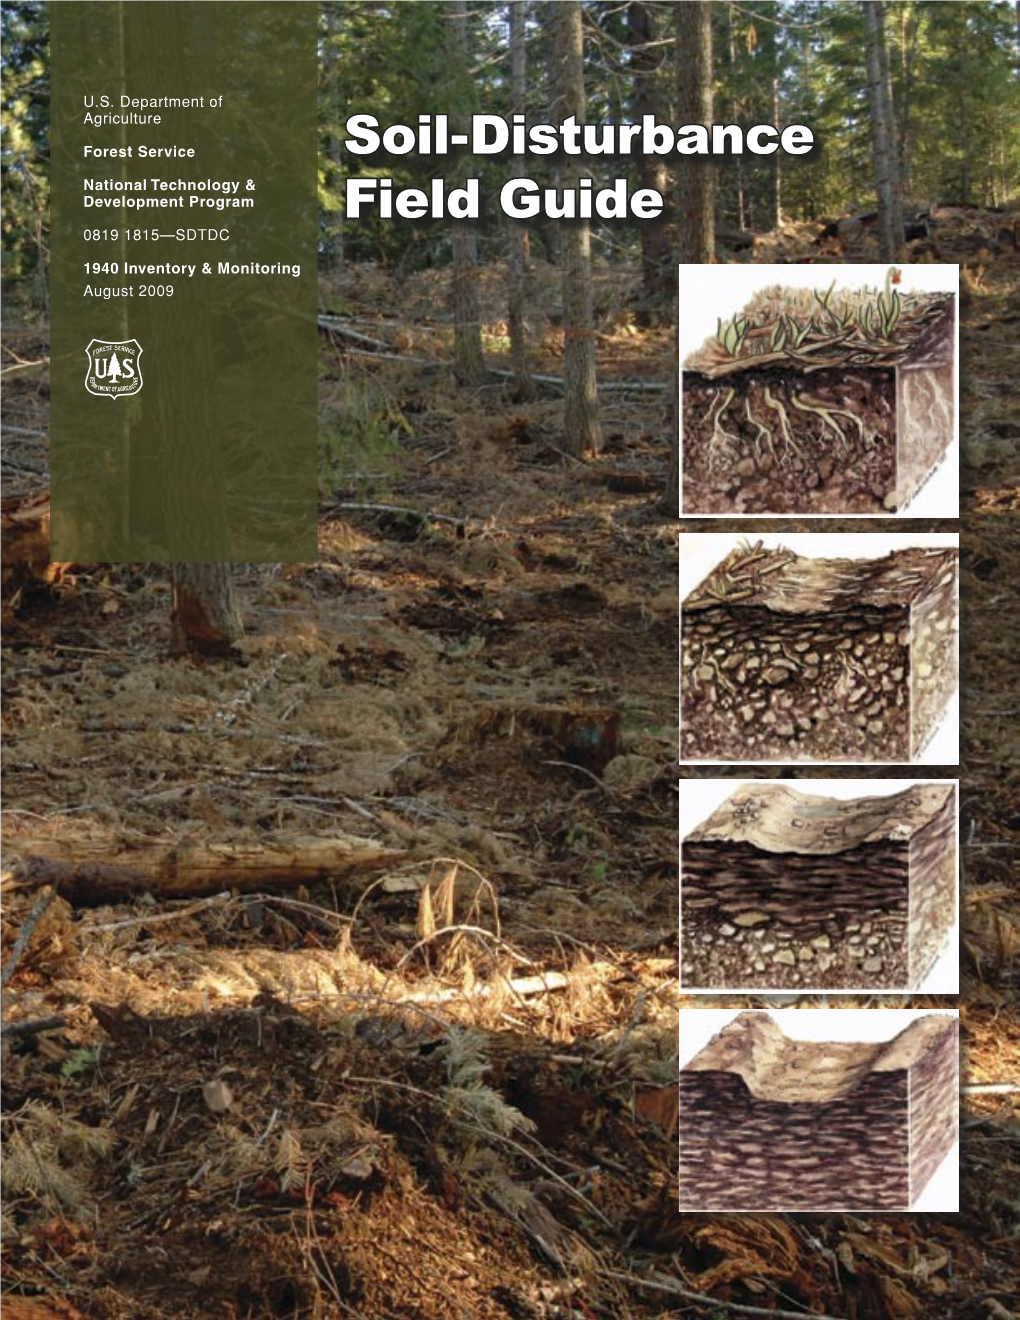 Soil-Disturbance Field Guide